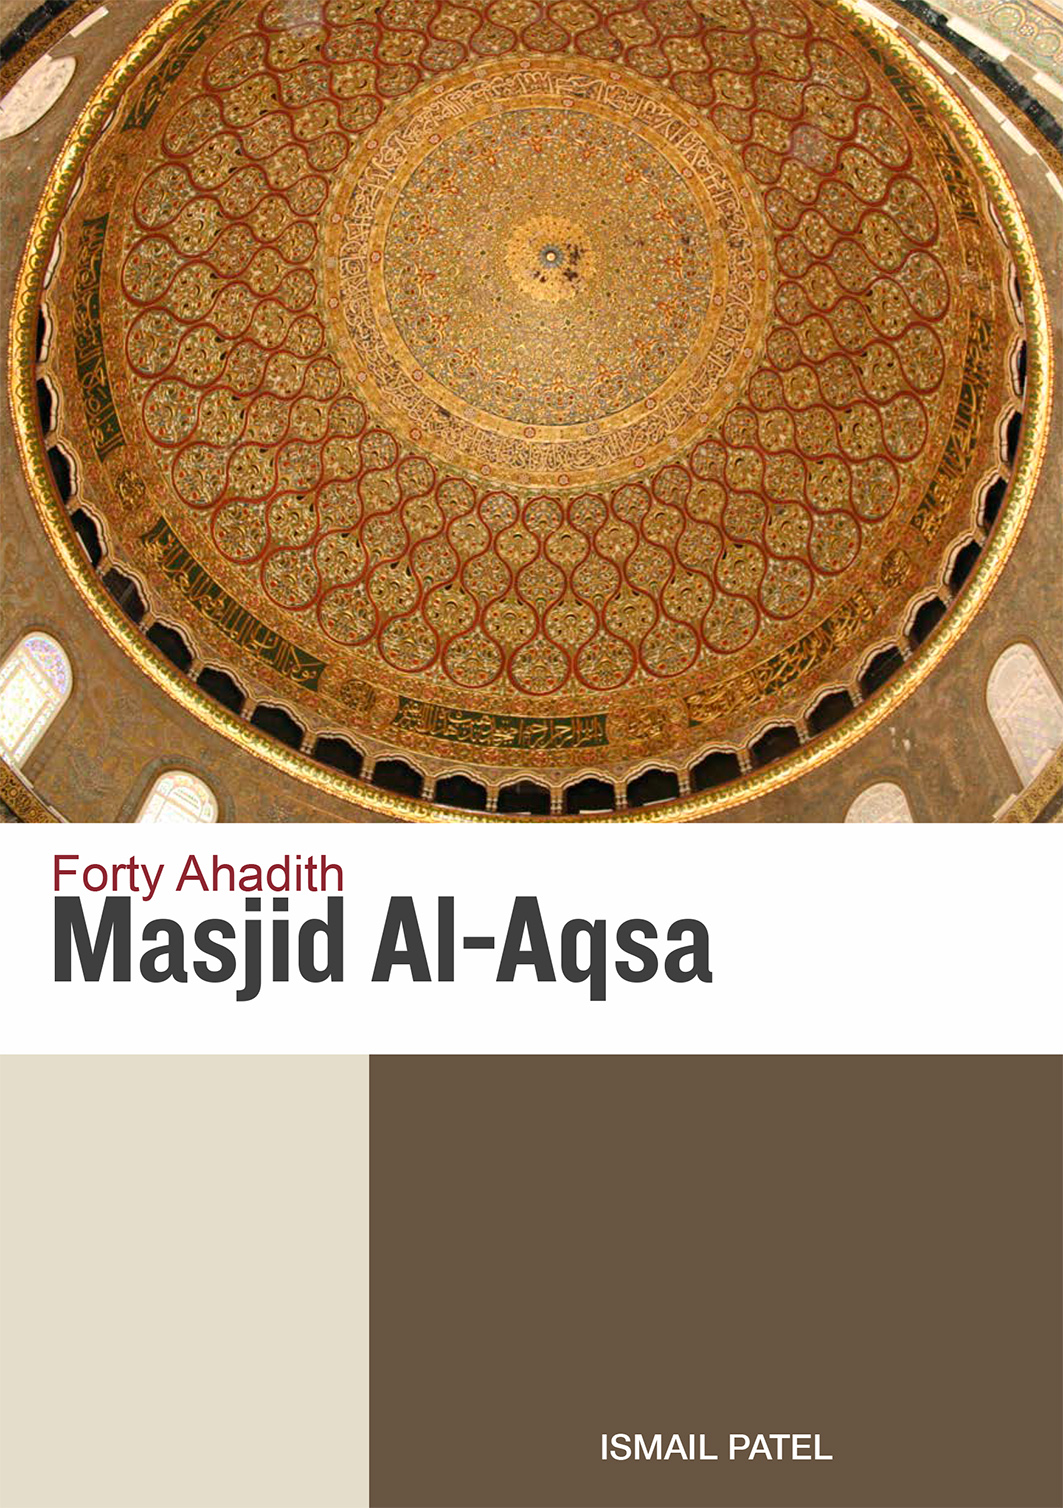 Forty Ahadith concerning Masjid al-Aqsa